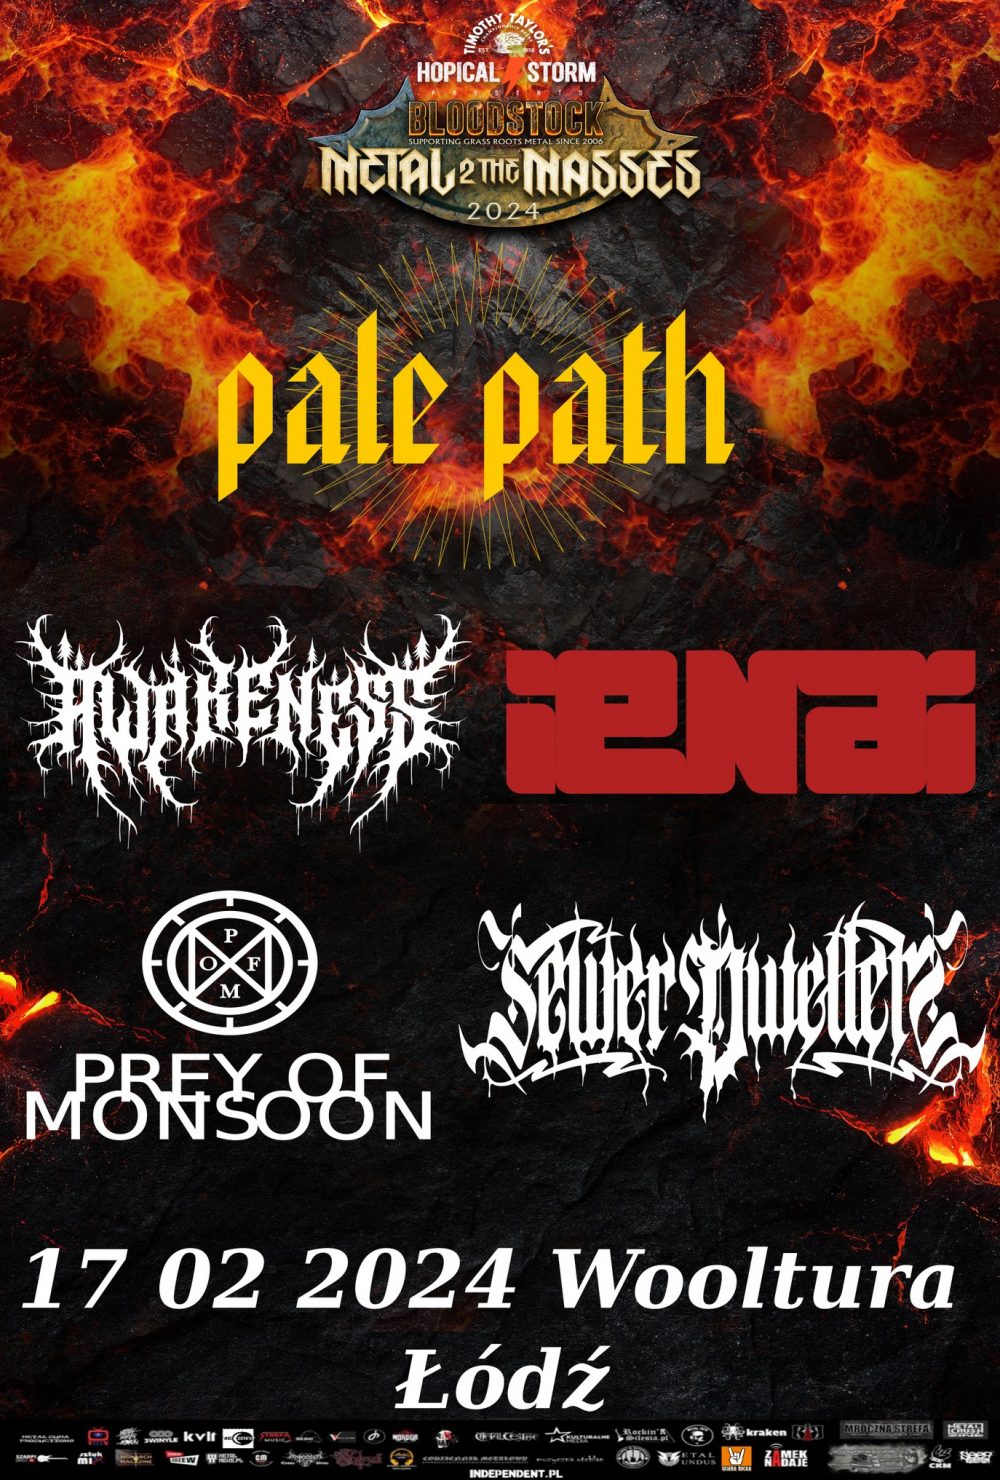 PALE PATH + IENAI + PREY OF MONSOON + AWAKENESS + SEWER DWELLERS -  Metal 2 the Masses Polska 2024 - Wooltura, Łódź